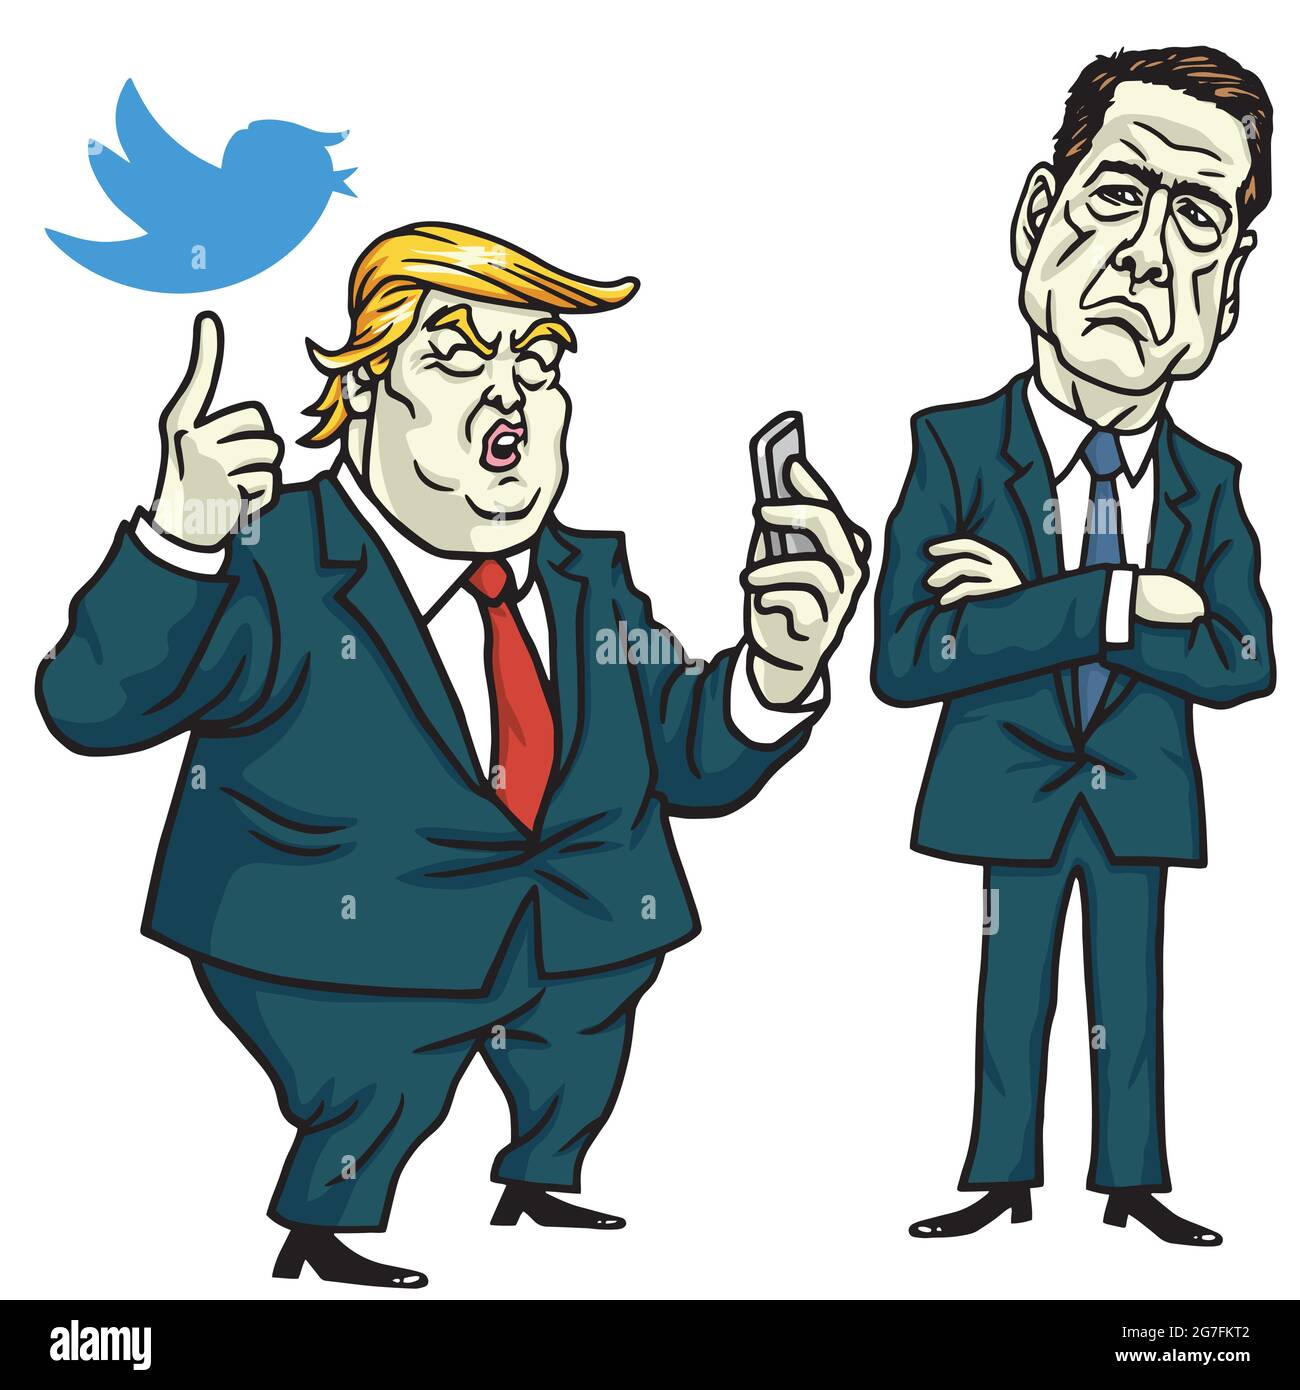 Donald Trump With James Comey Cartoon Vector Illustration Stock Vector